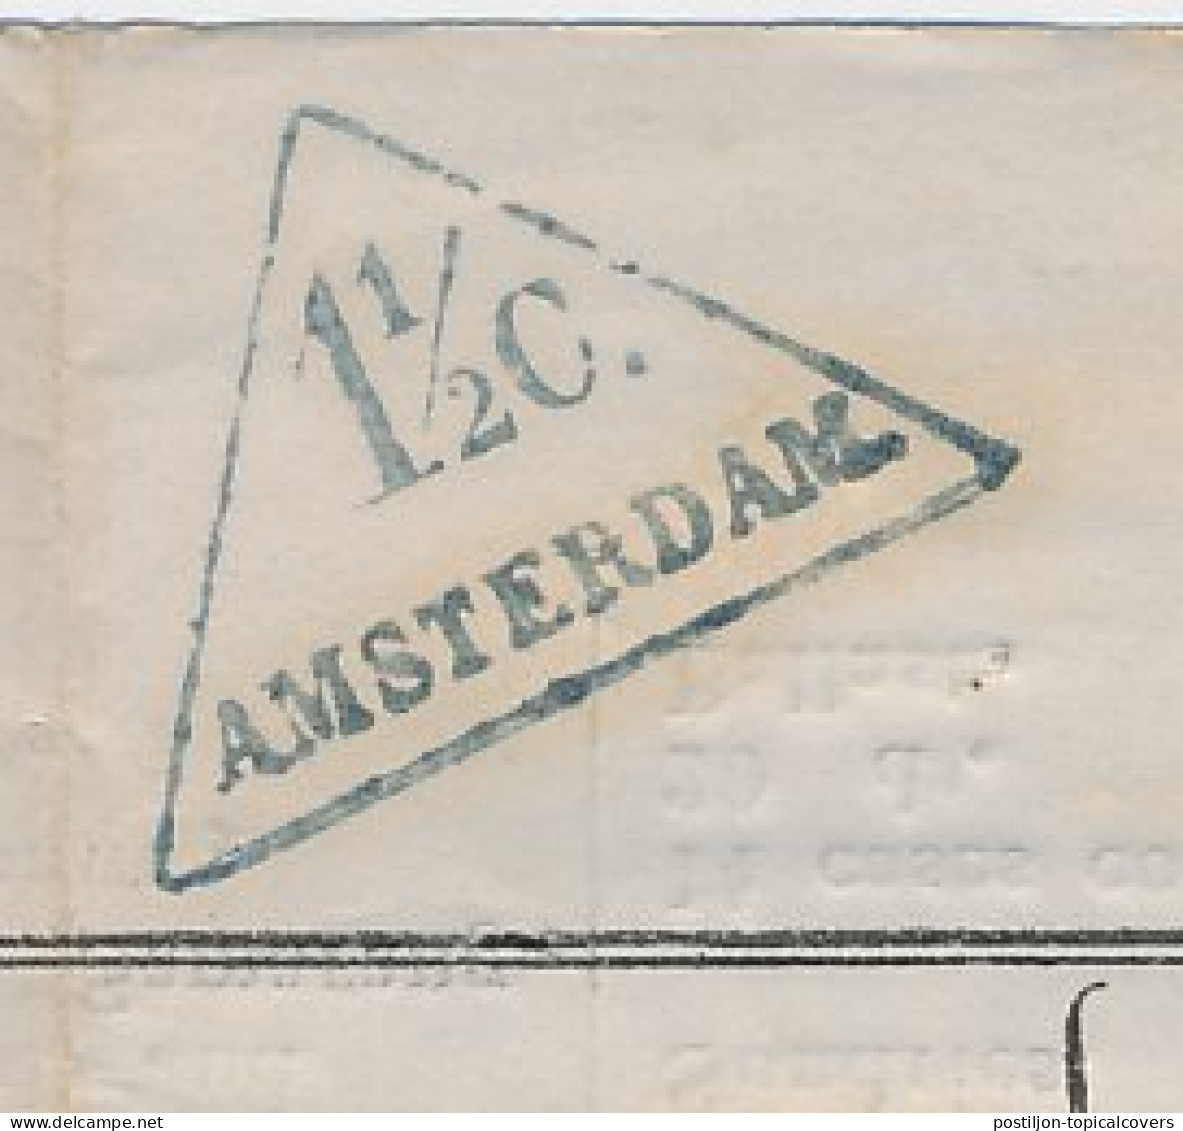 Amsterdam 1 1/2 C. Drukwerk Driehoekstempel 1854 - Forwarded - Fiscaux